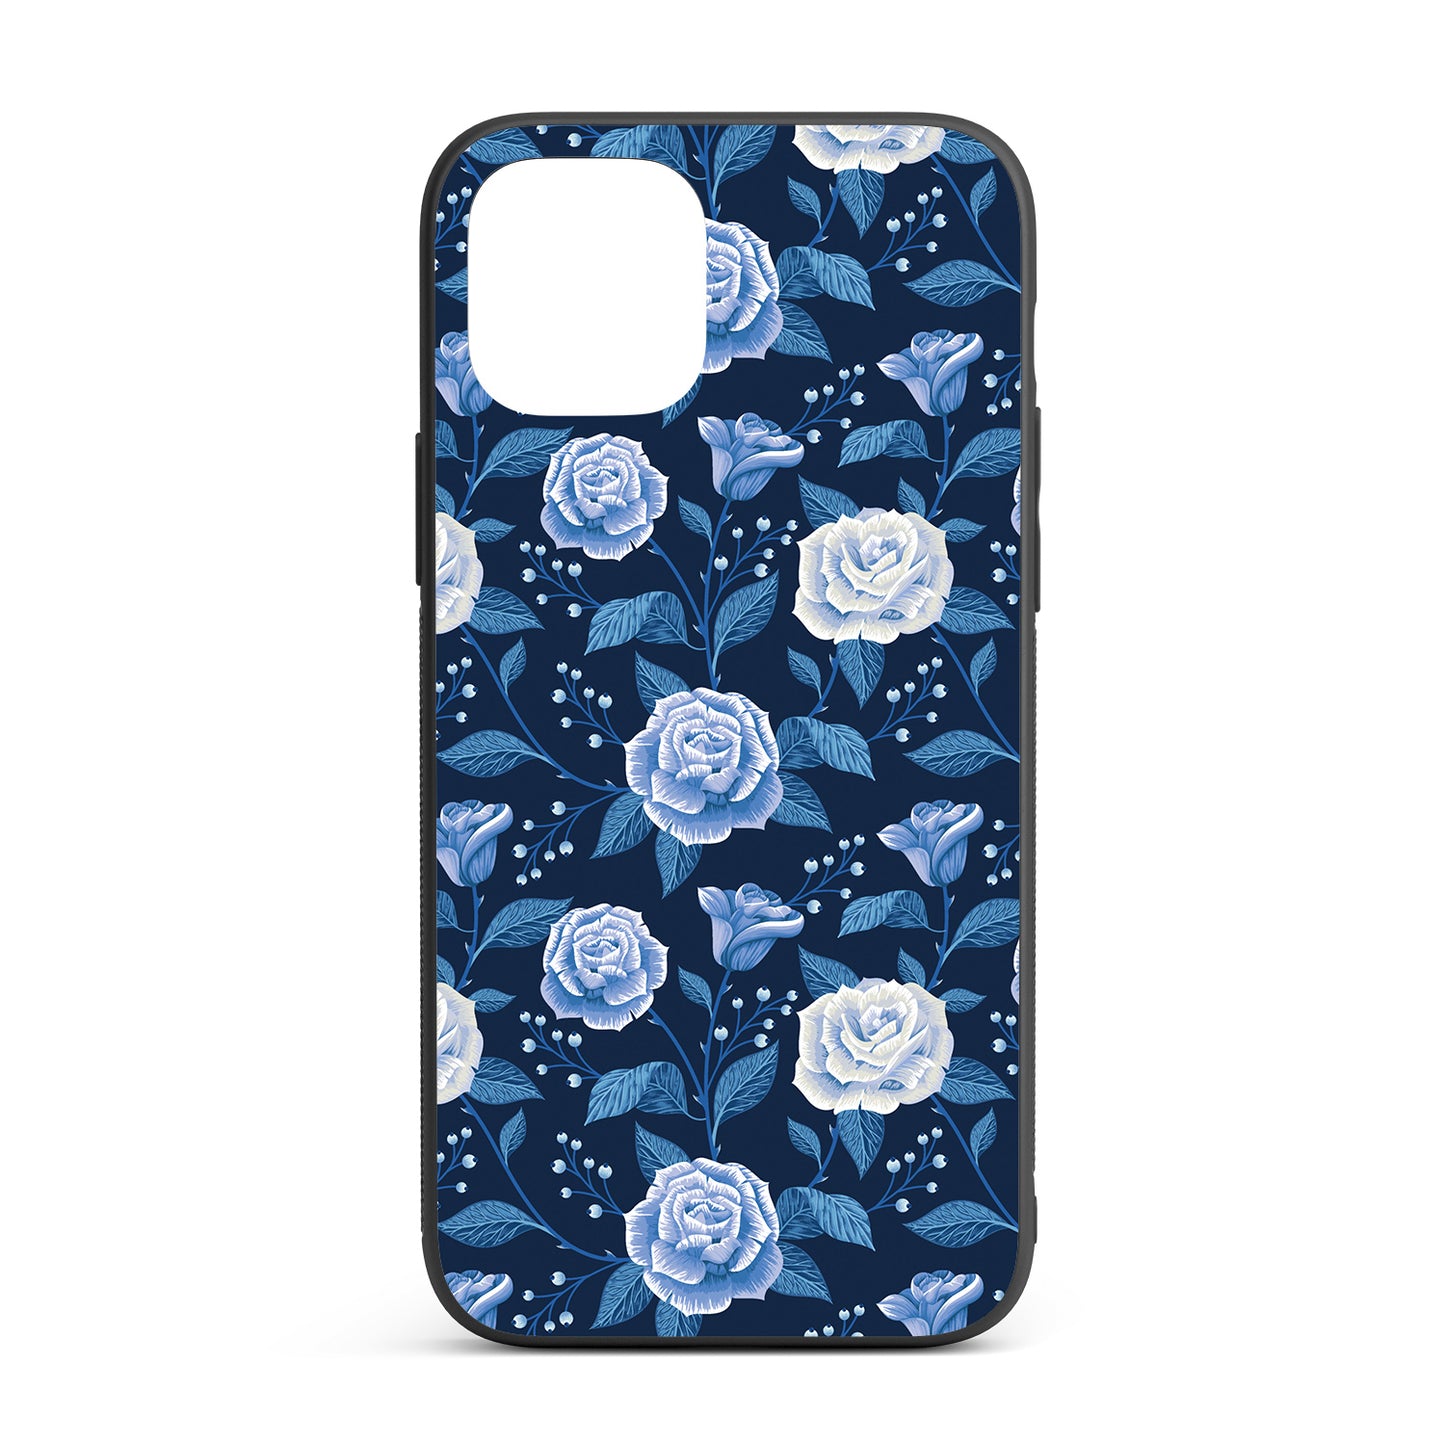 Midnight Rose iPhone glass case